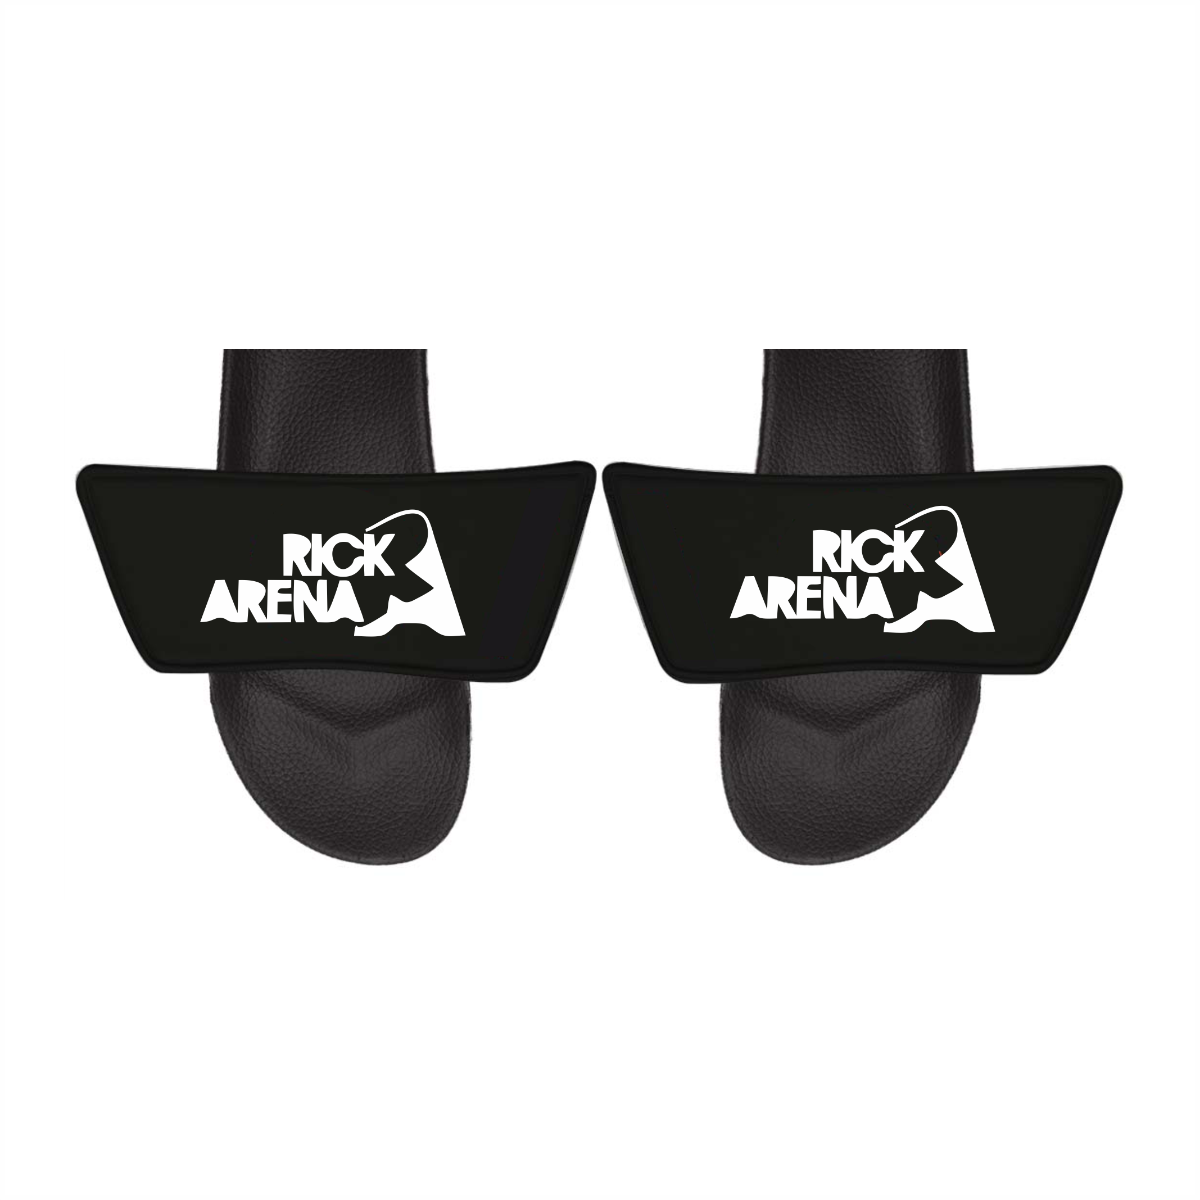 Badelatschen "RICK ARENA Logo" schwarz